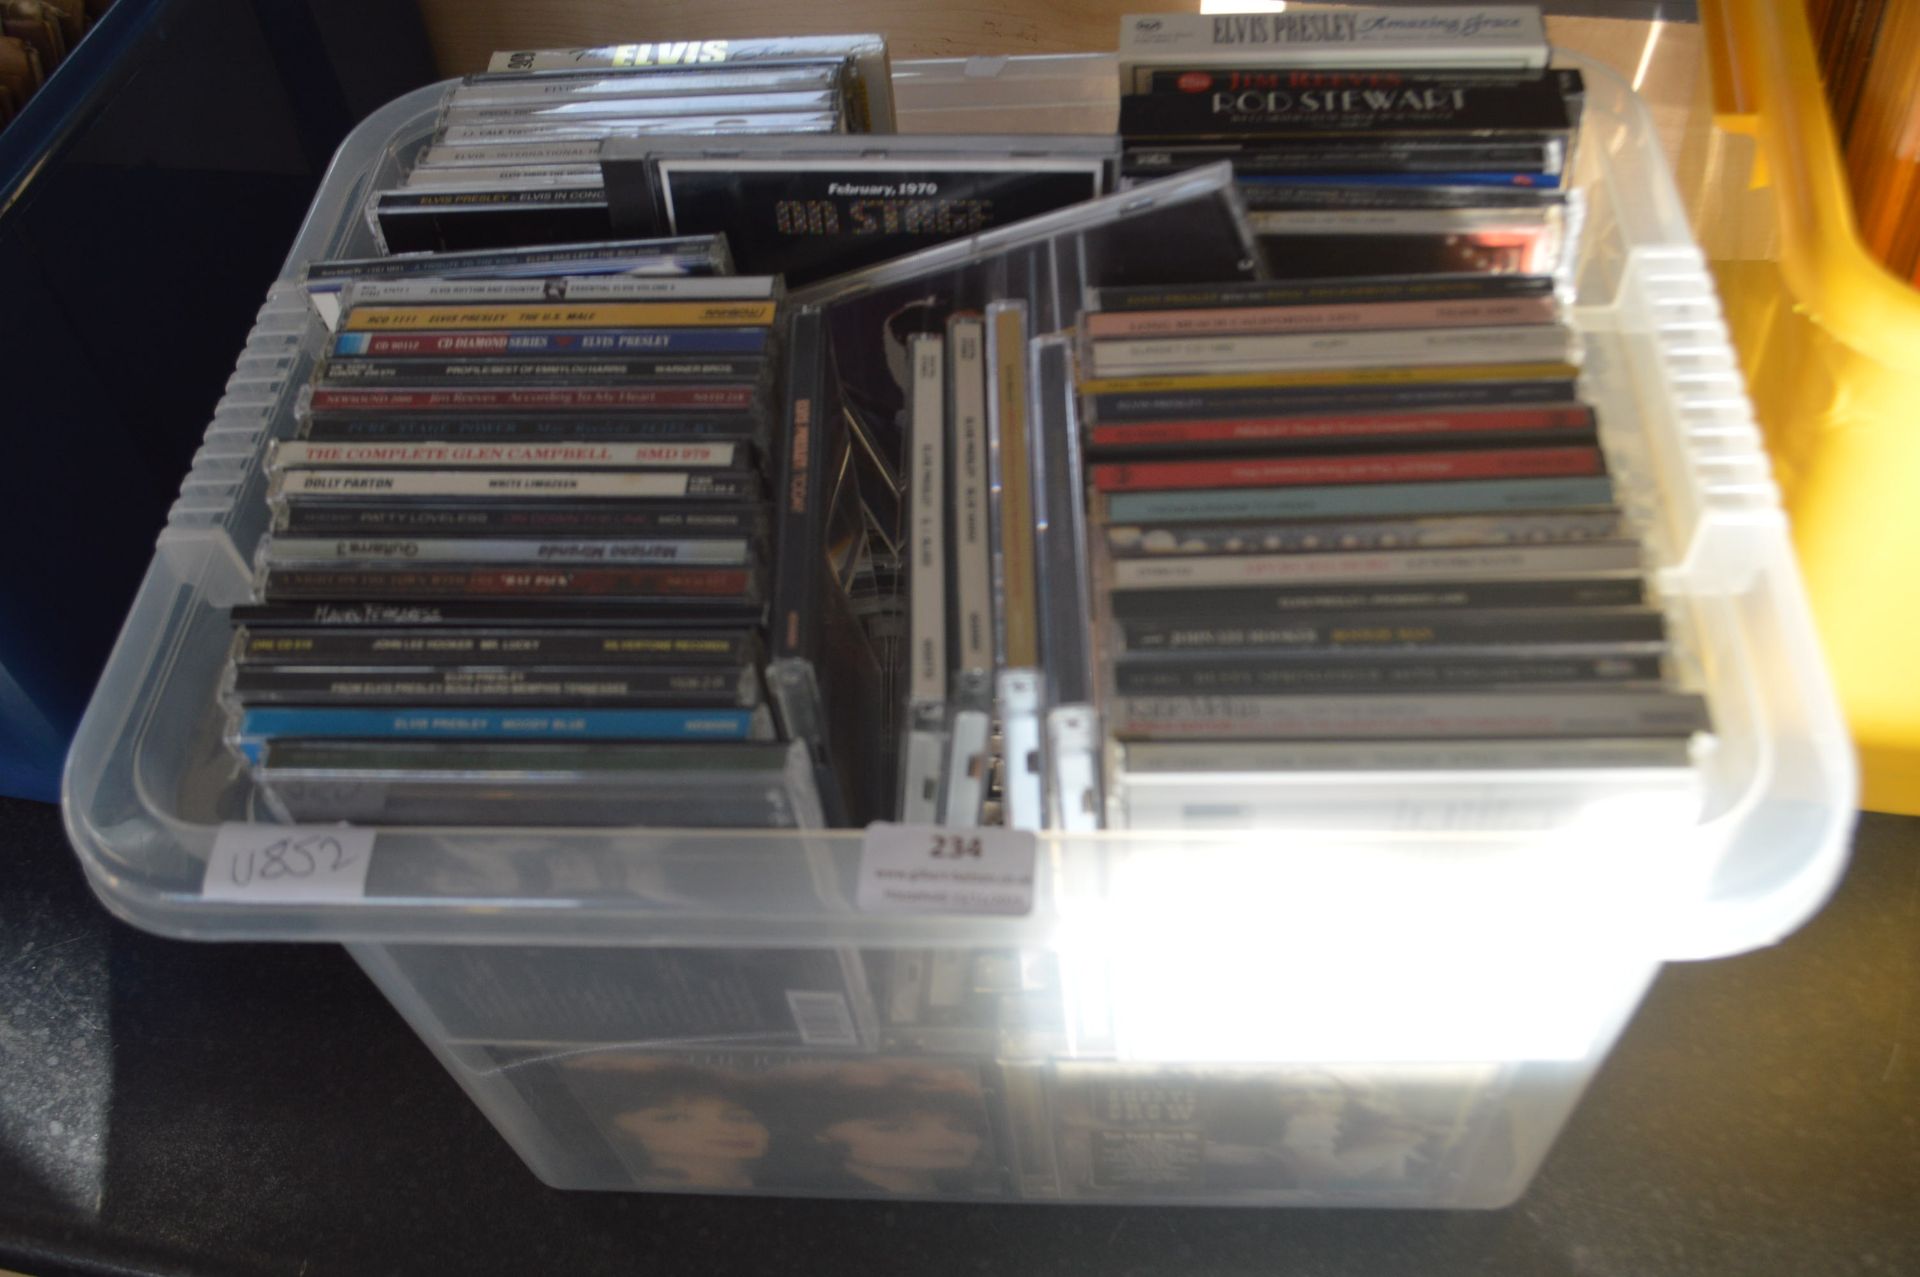 80+ CDs Including Elvis, etc.